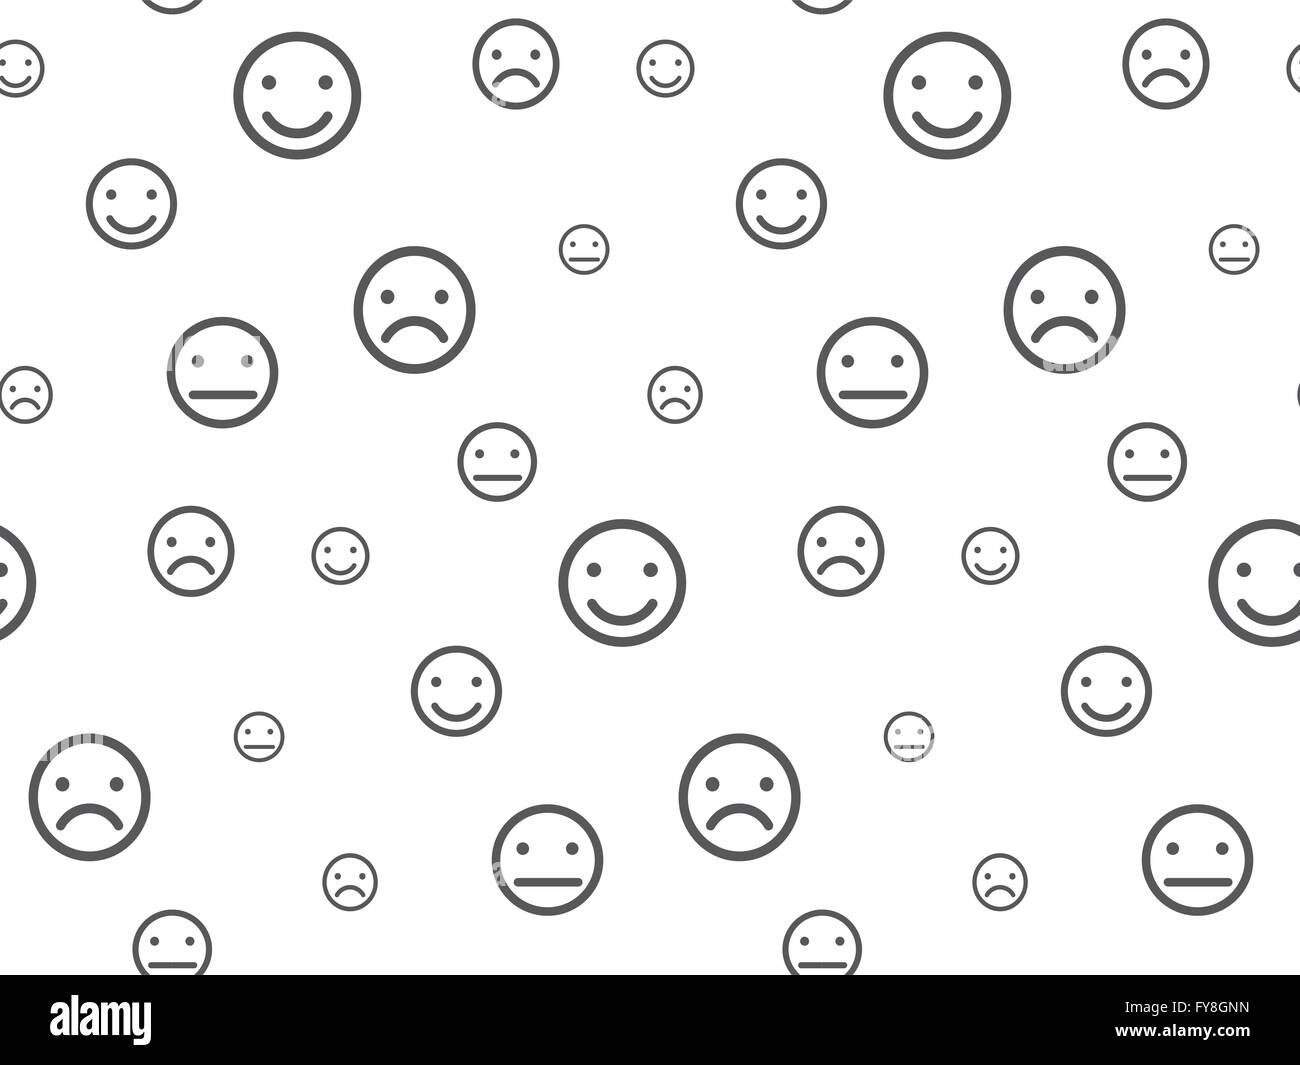 Smileys seamless pattern vector illustration Illustration de Vecteur